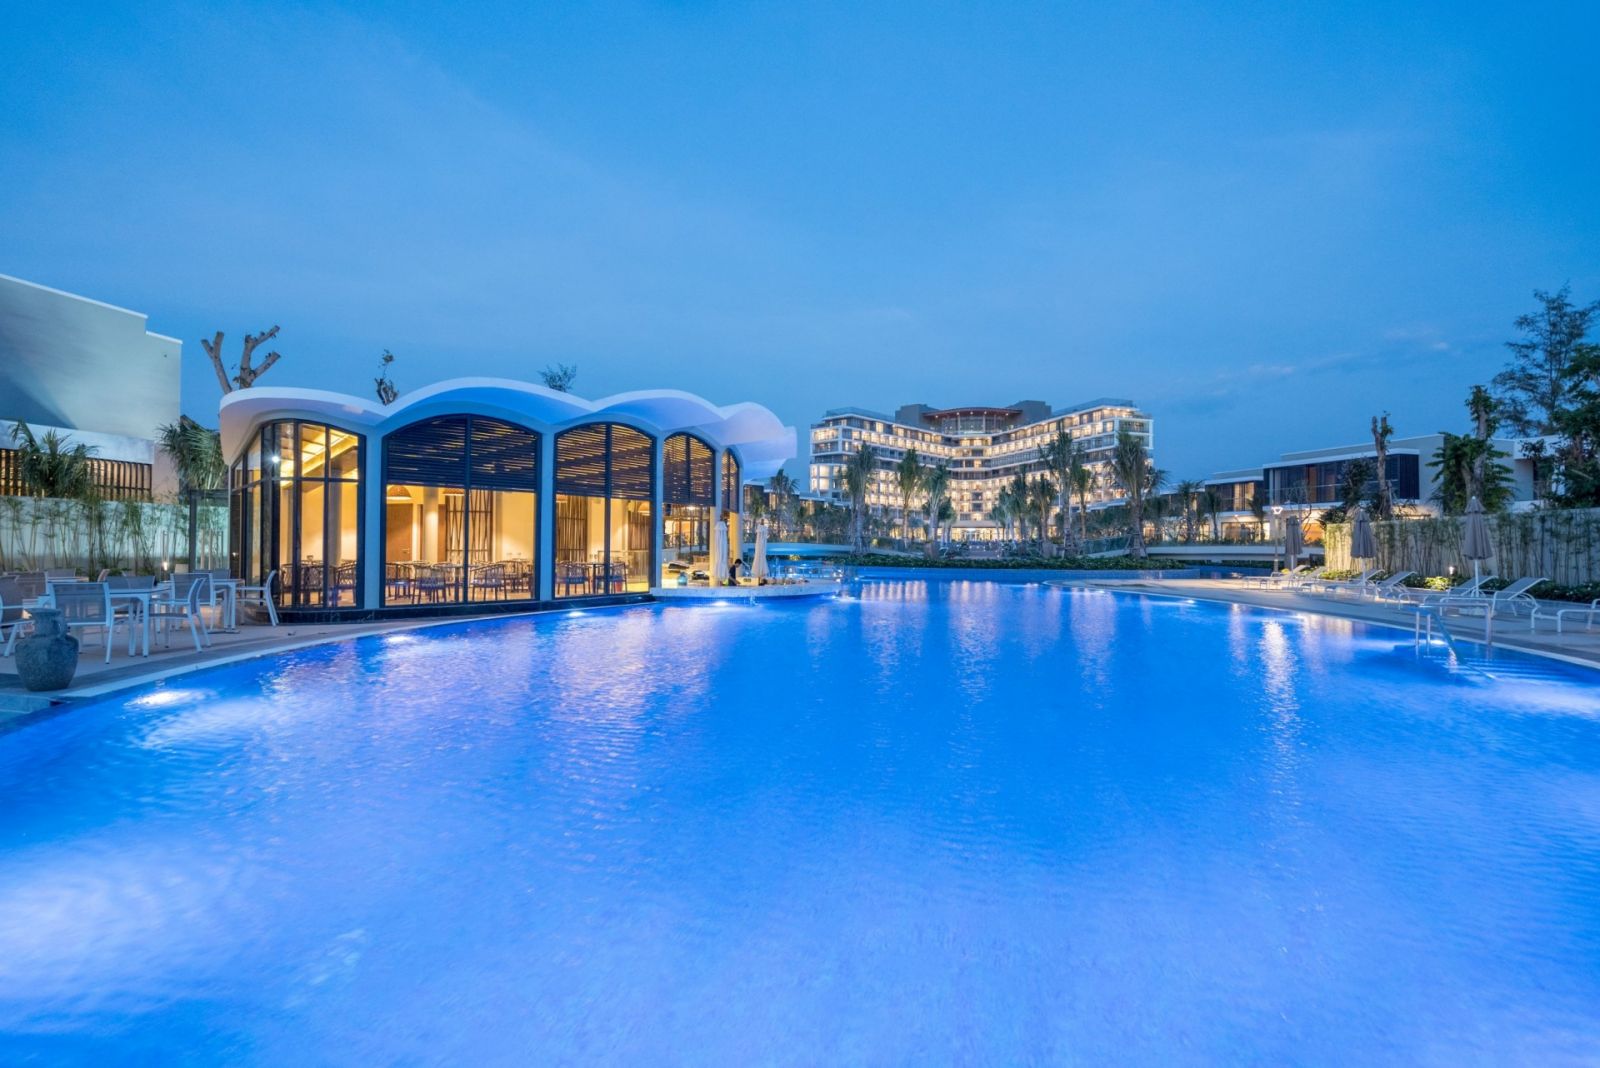 The Best Western Premier Sonasea Phu Quoc resort’s 300-meter pool is one of Southeast Asia’s longest lagoon pools. (Photo: Courtesy of Best Western Premier Sonasea Phu Quoc)